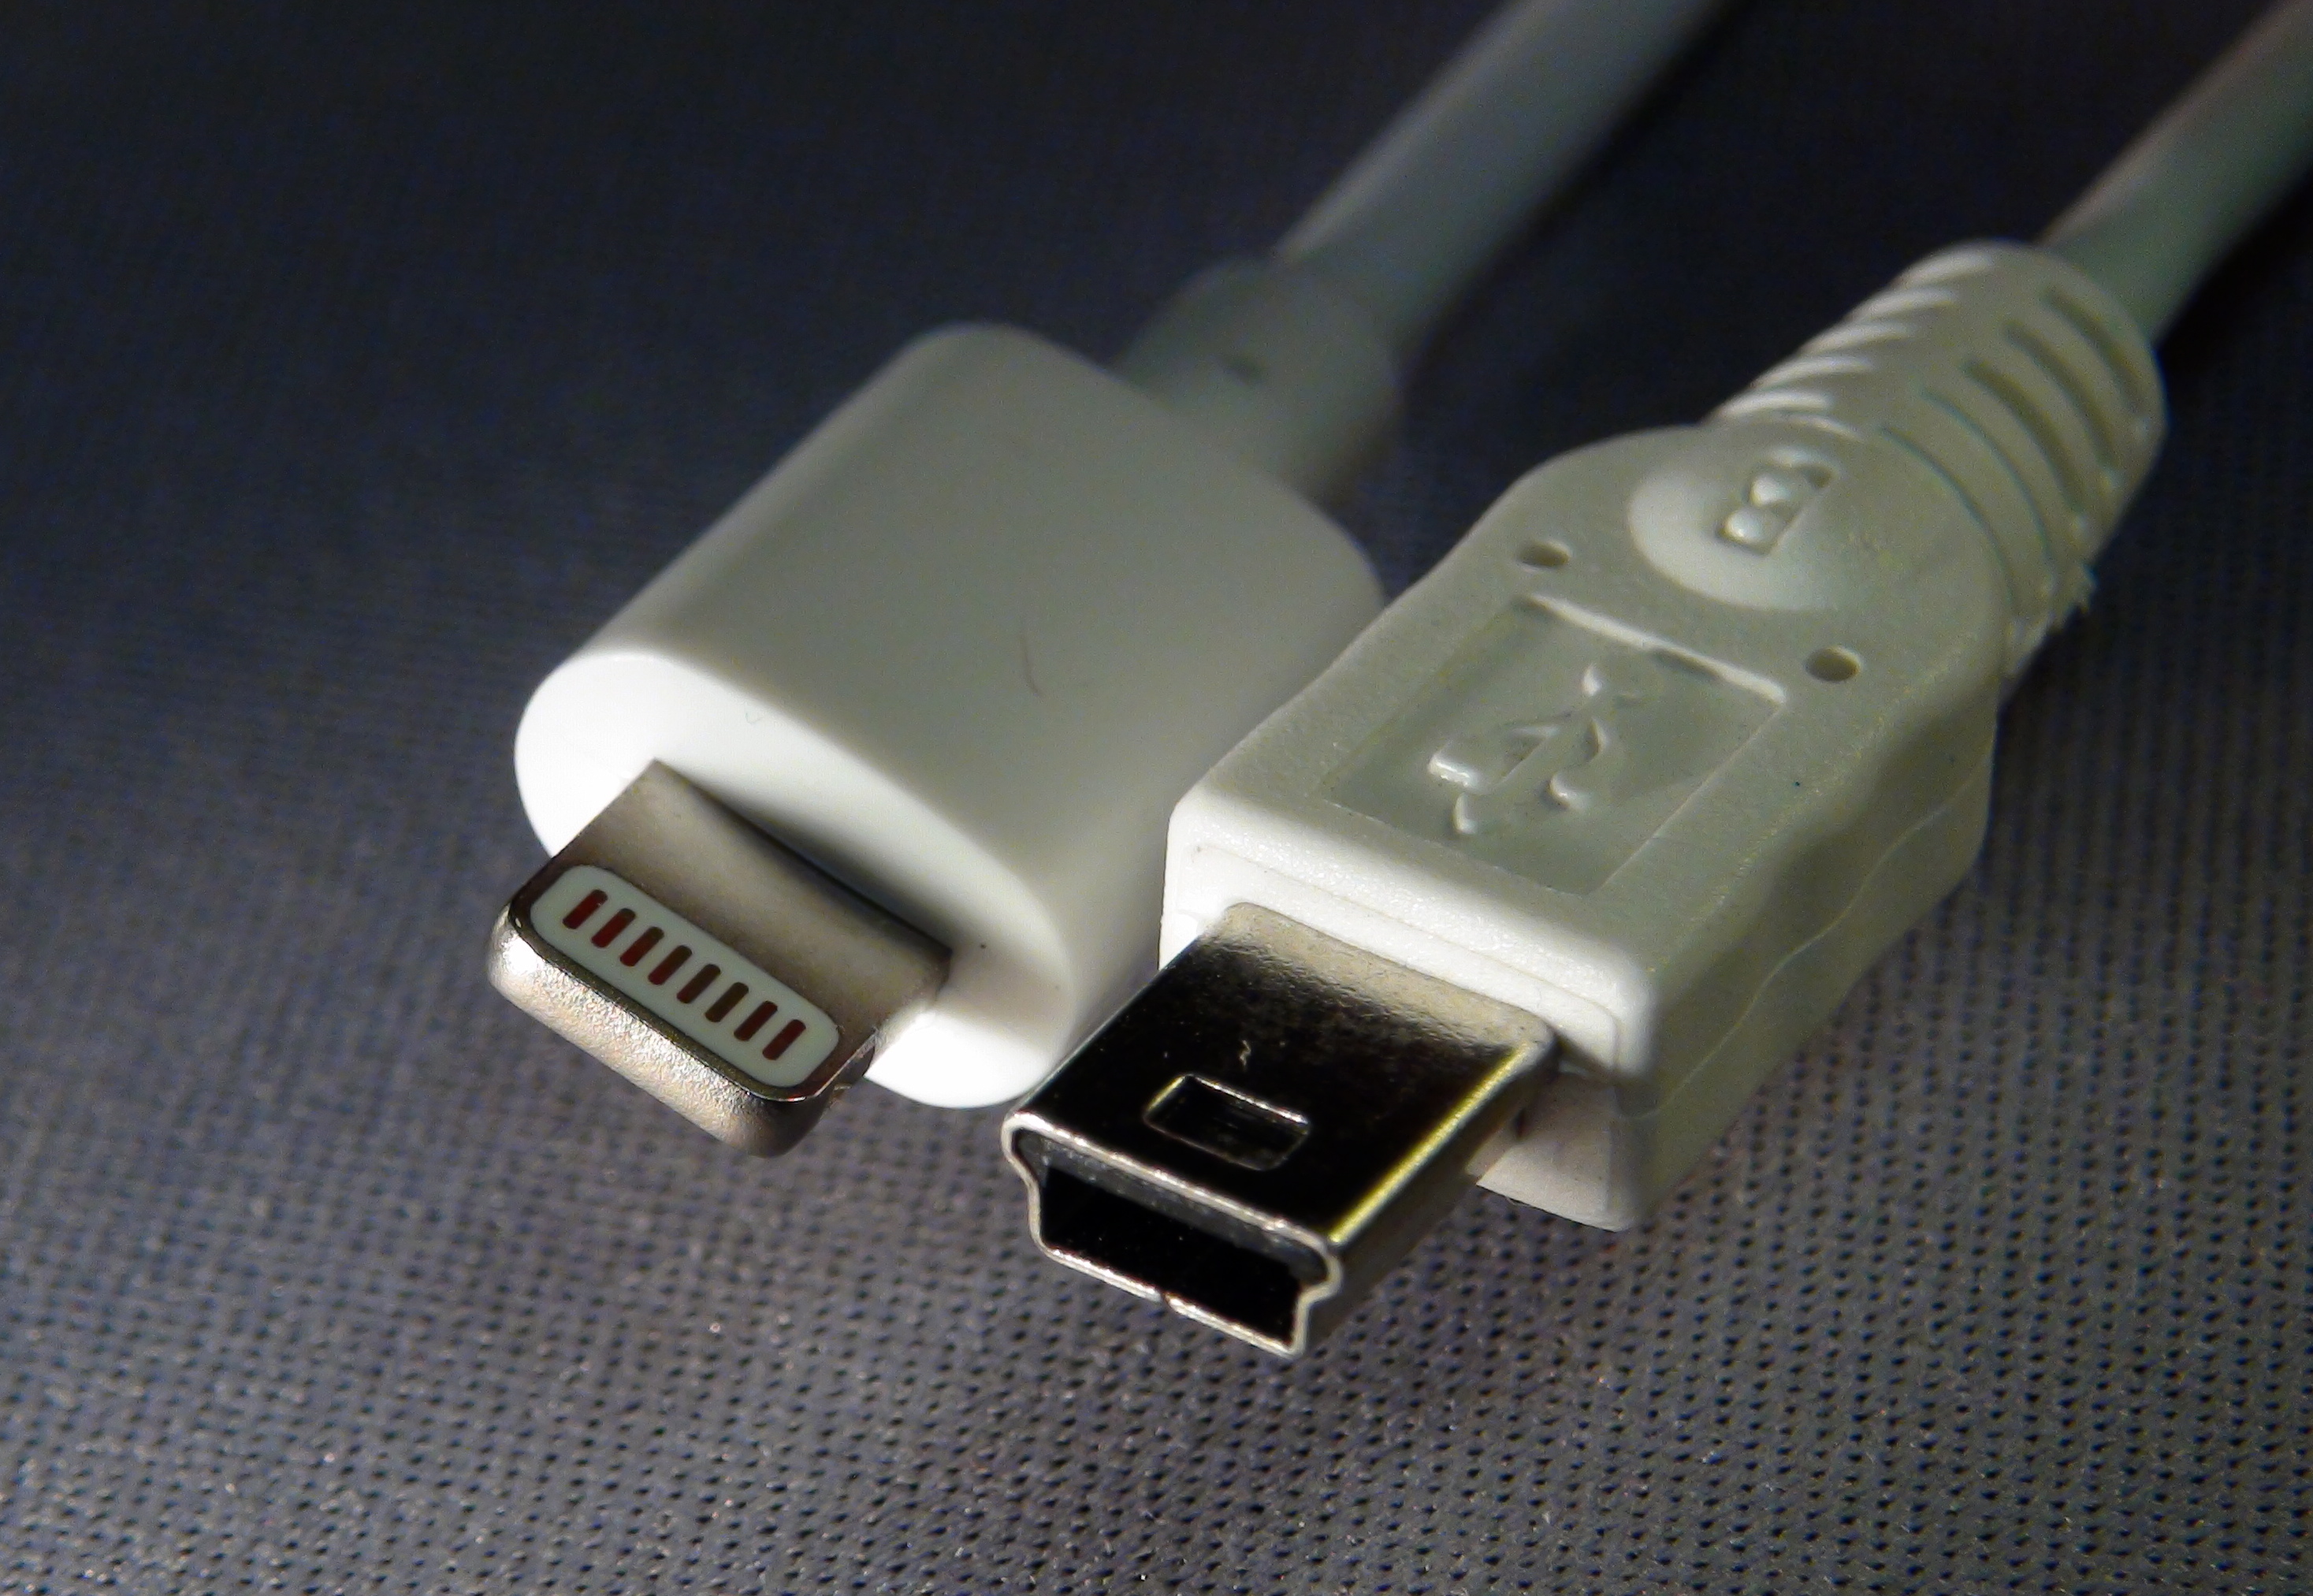 File:CO of Lightning and Mini-USB plugs.jpg - Wikimedia Commons